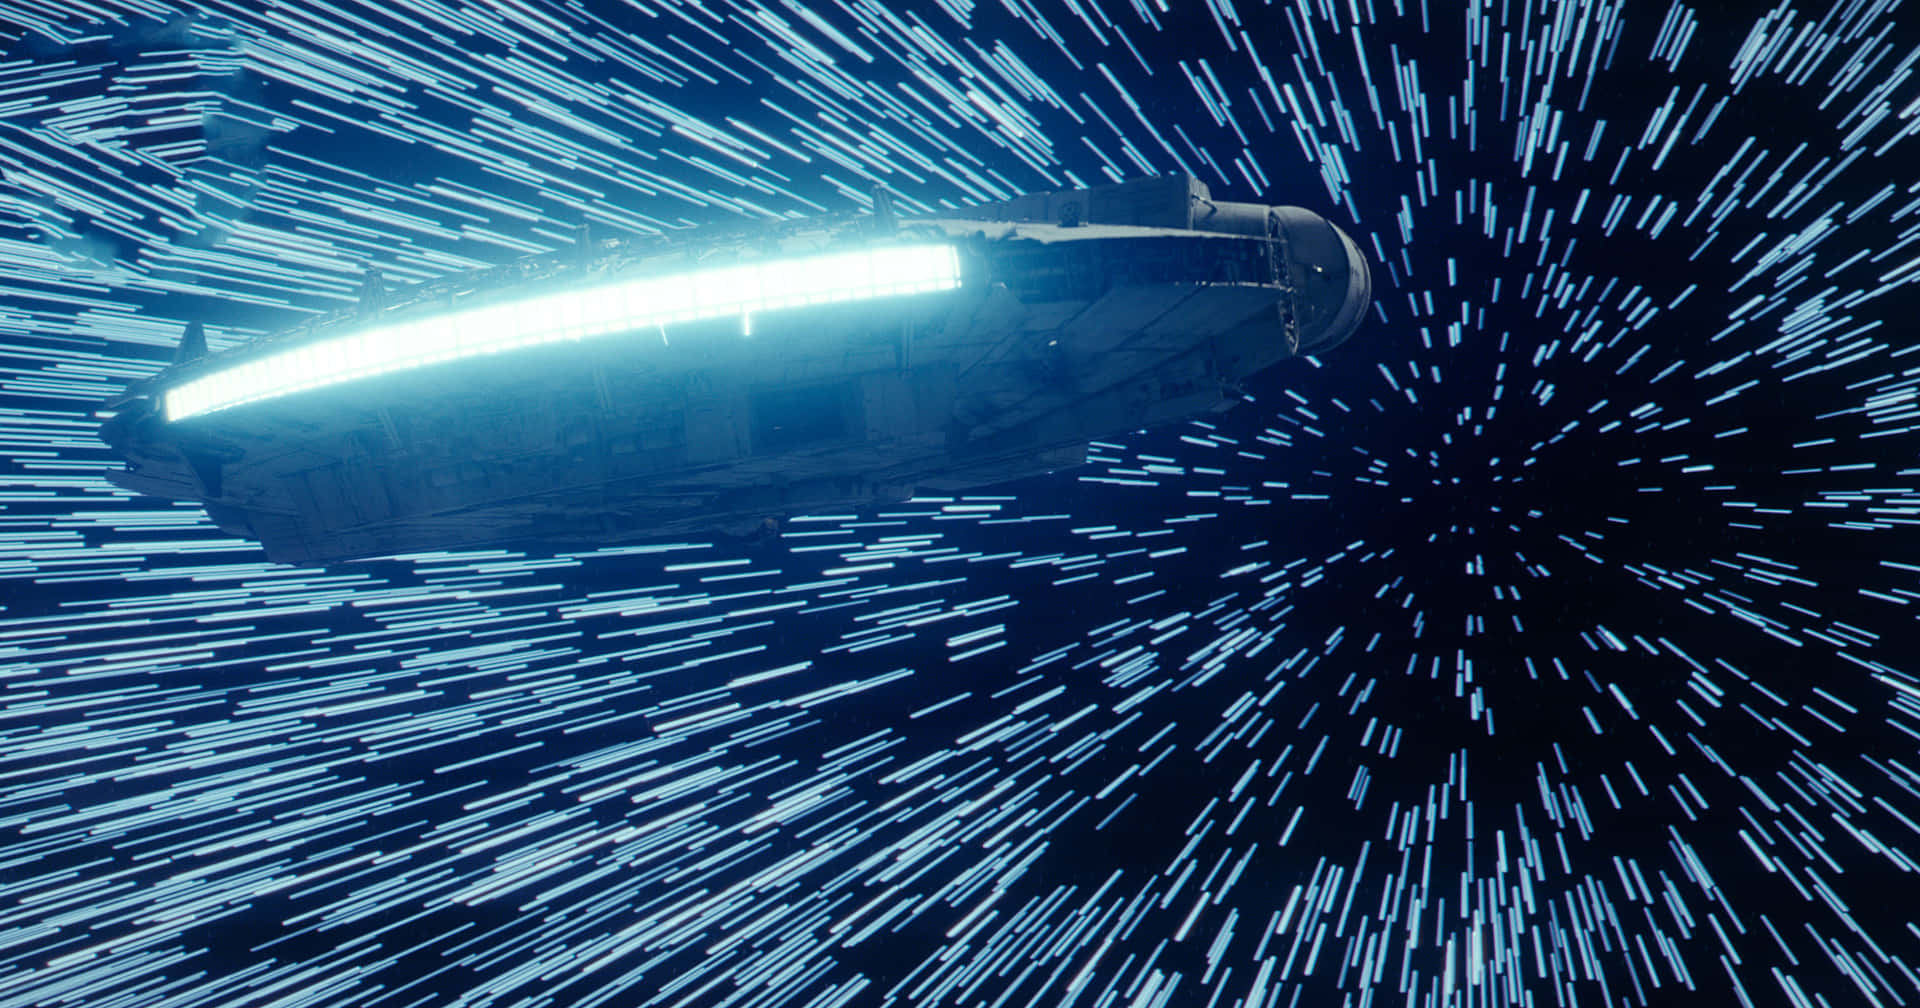 Star Wars' Legendary Starship Millenium Falcon Wallpaper